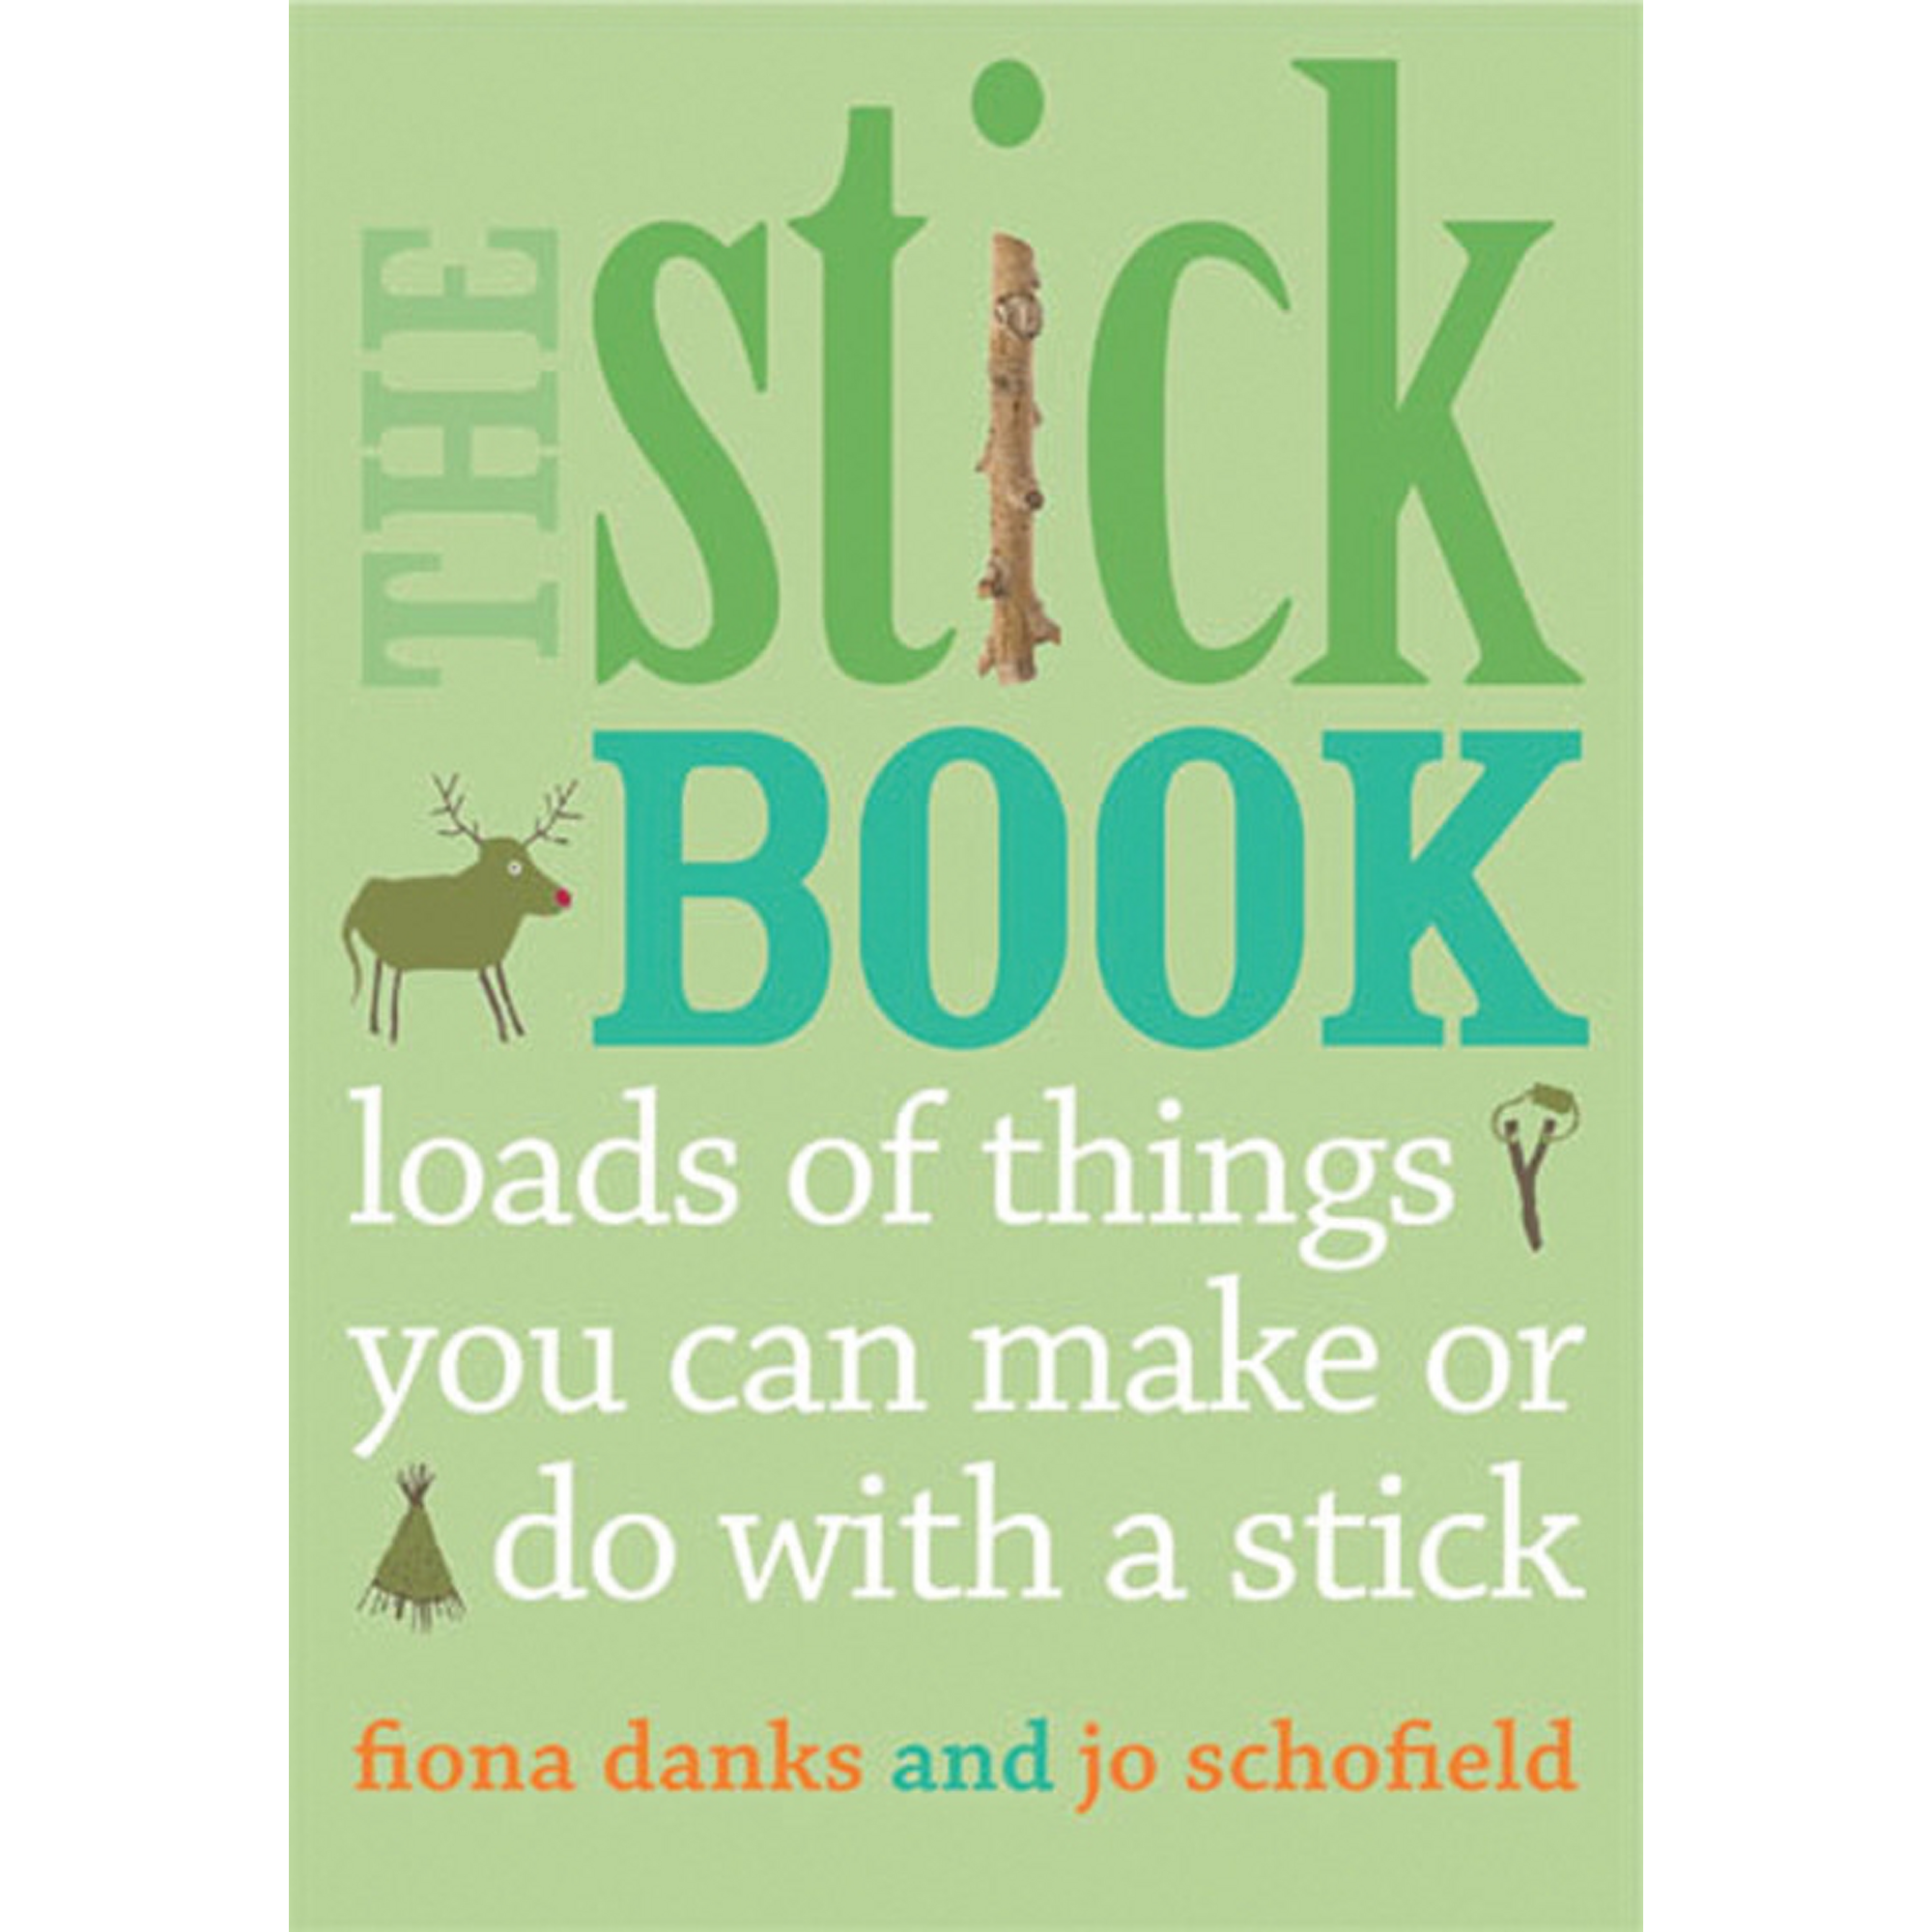 The Stick Book